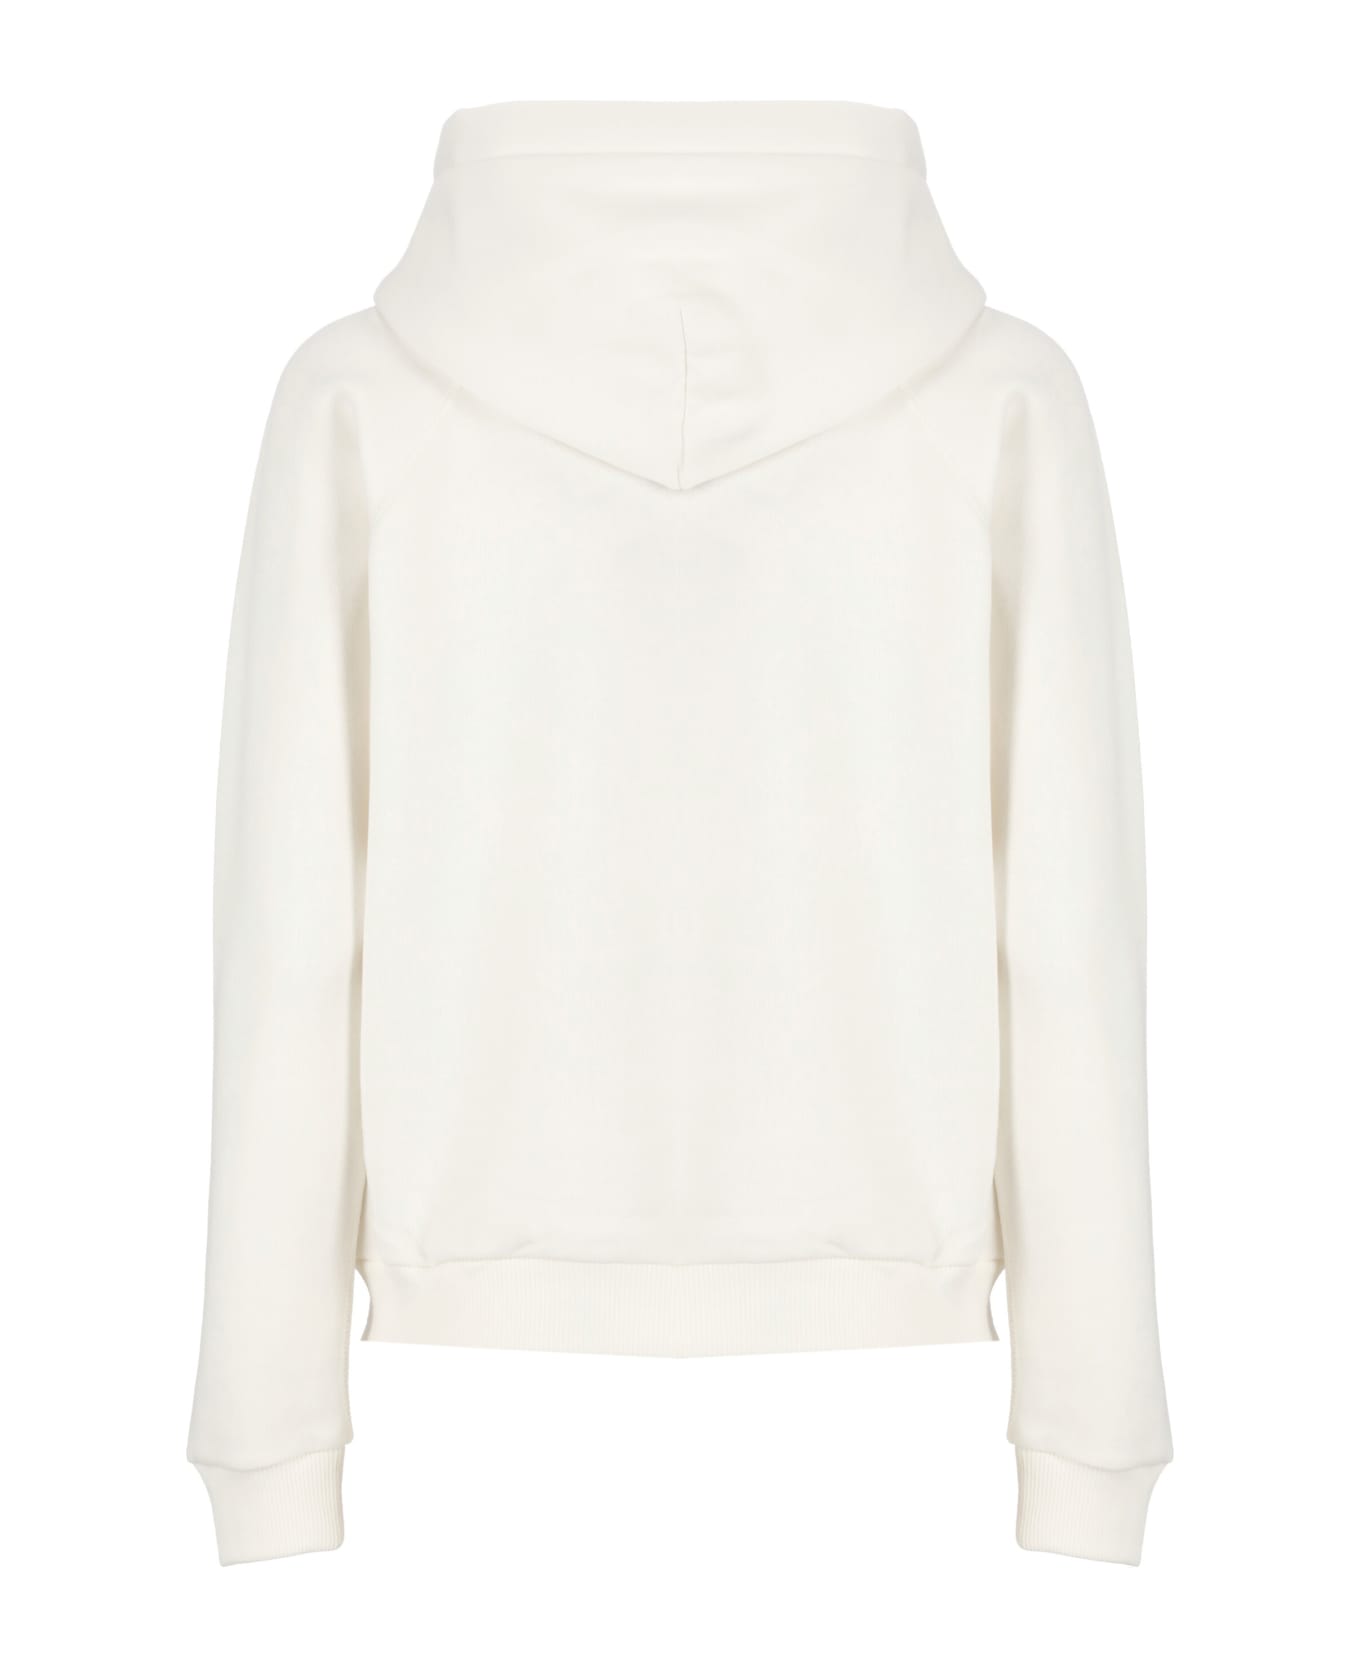 Polo Ralph Lauren White Cotton Blend Sweatshirt - Ivory